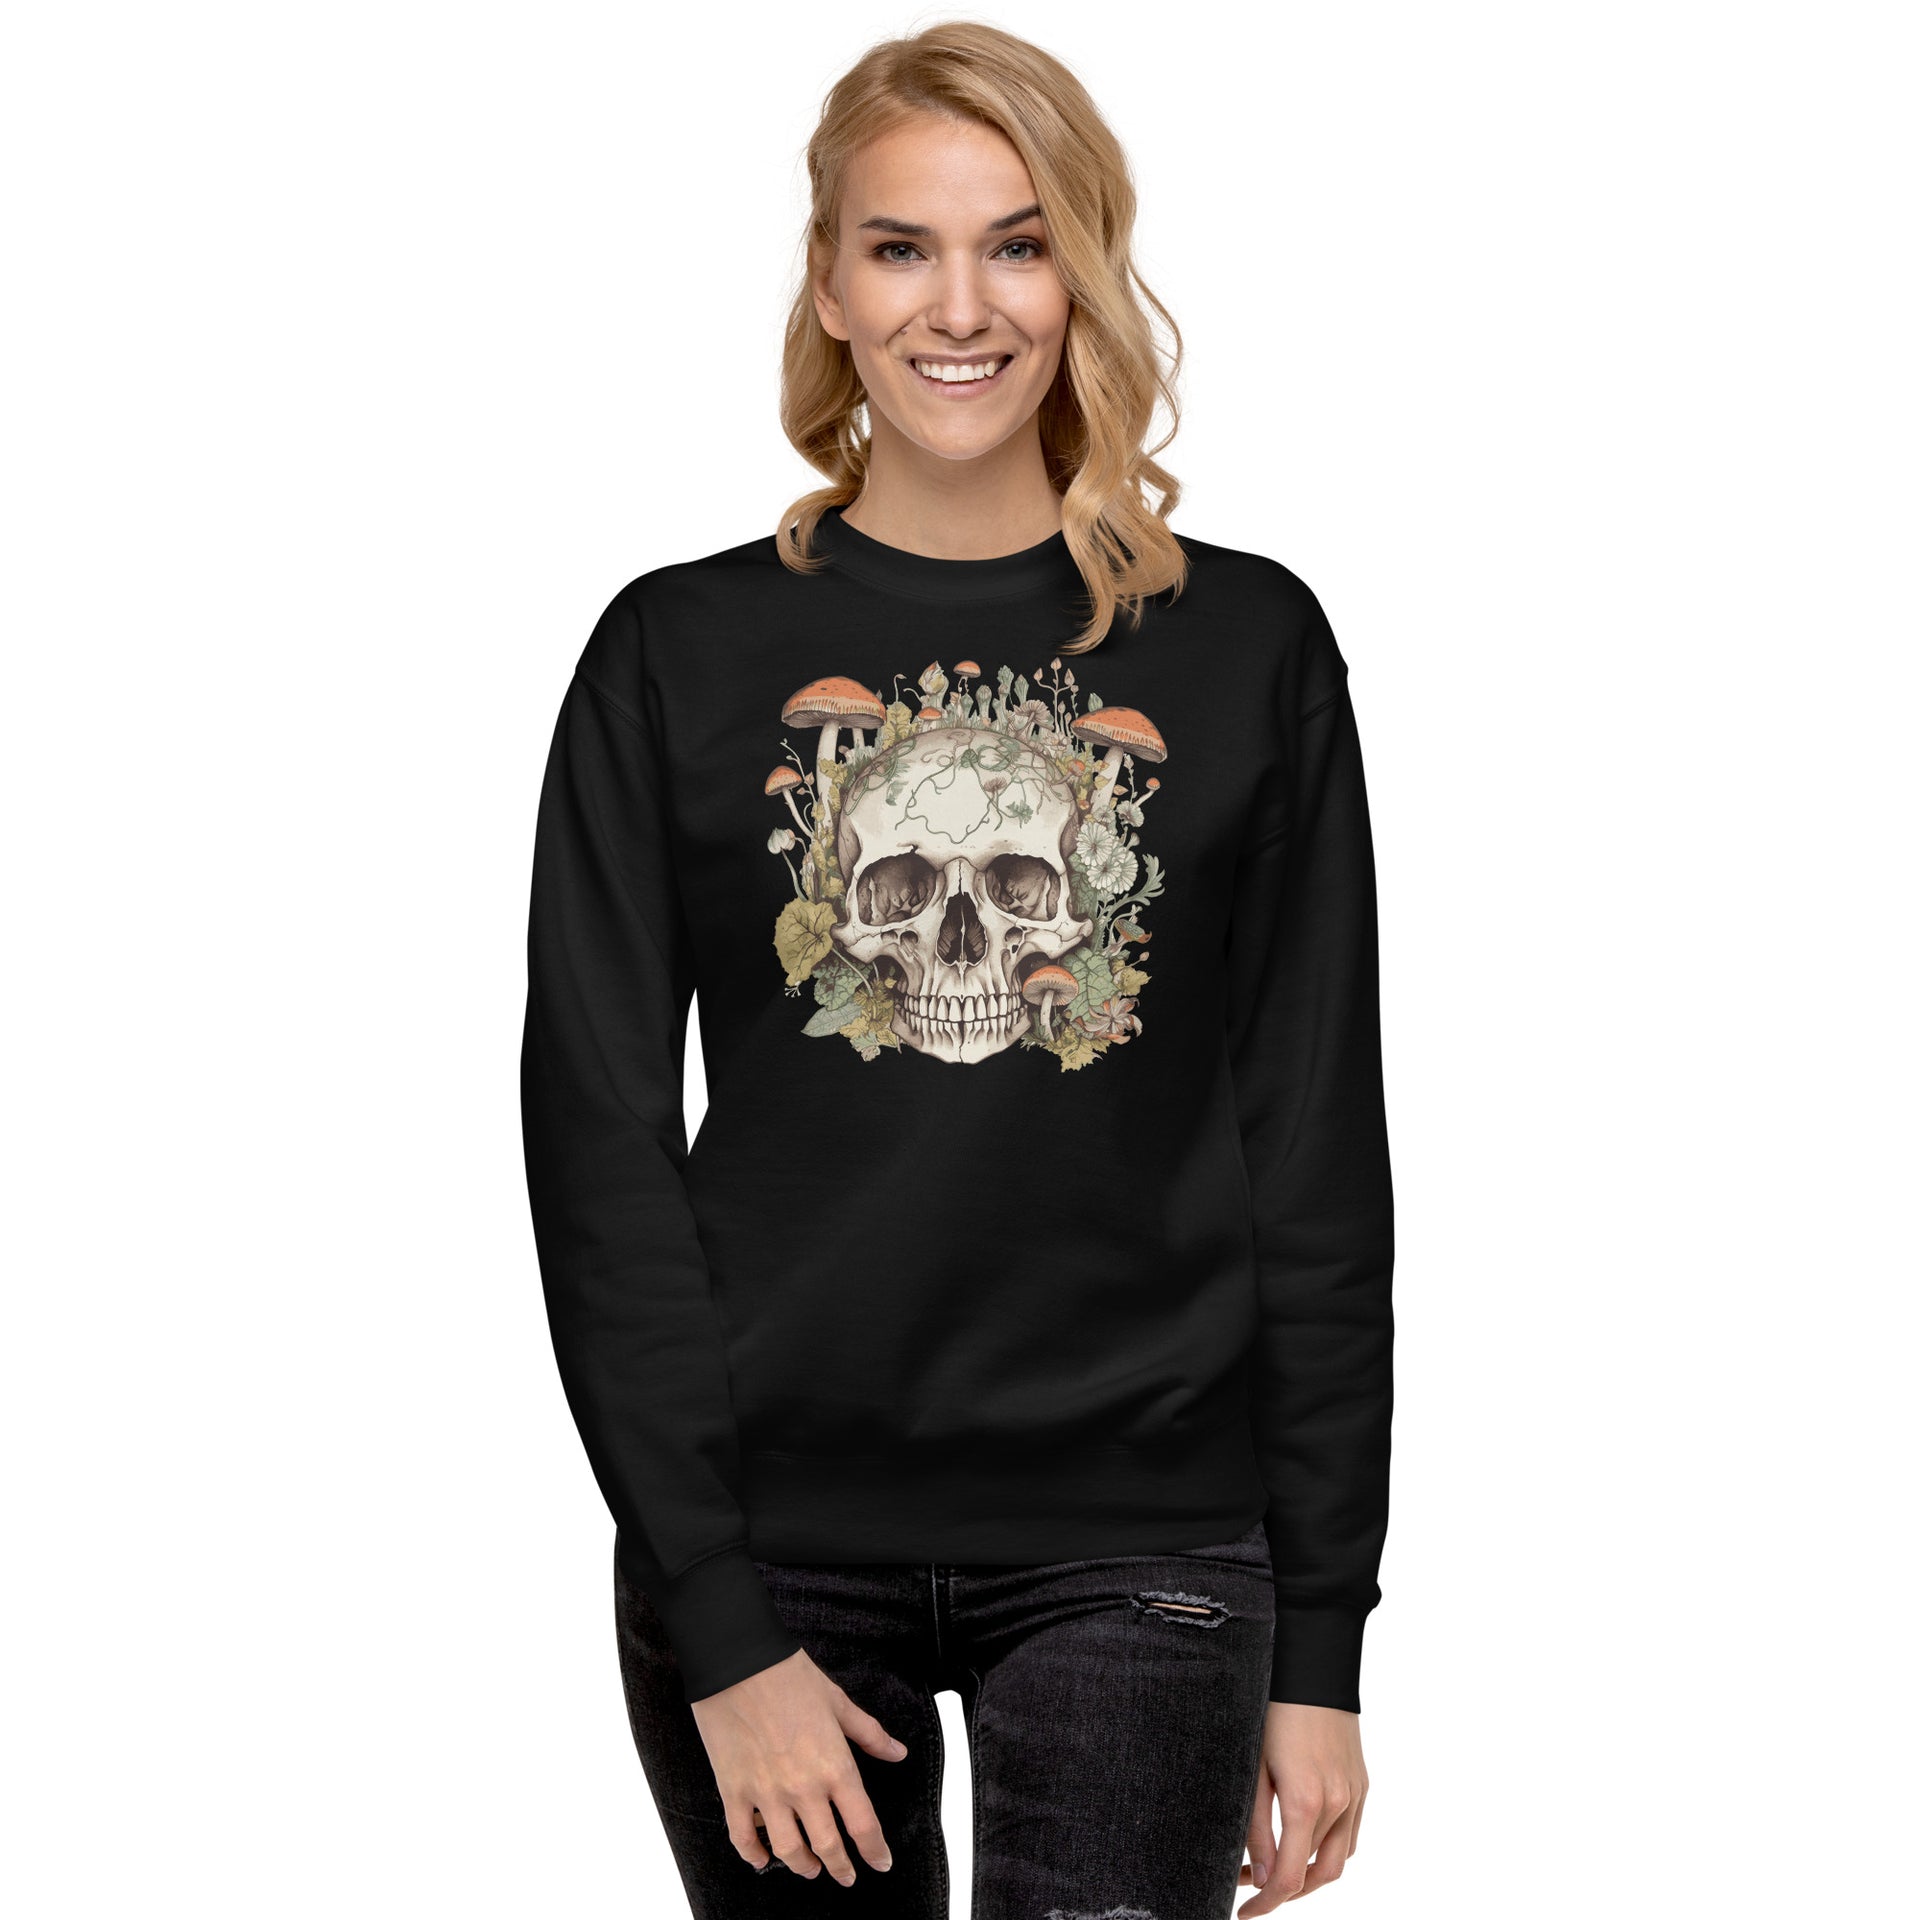 Retro Skull With Mushrooms Unisex Sweatshirt